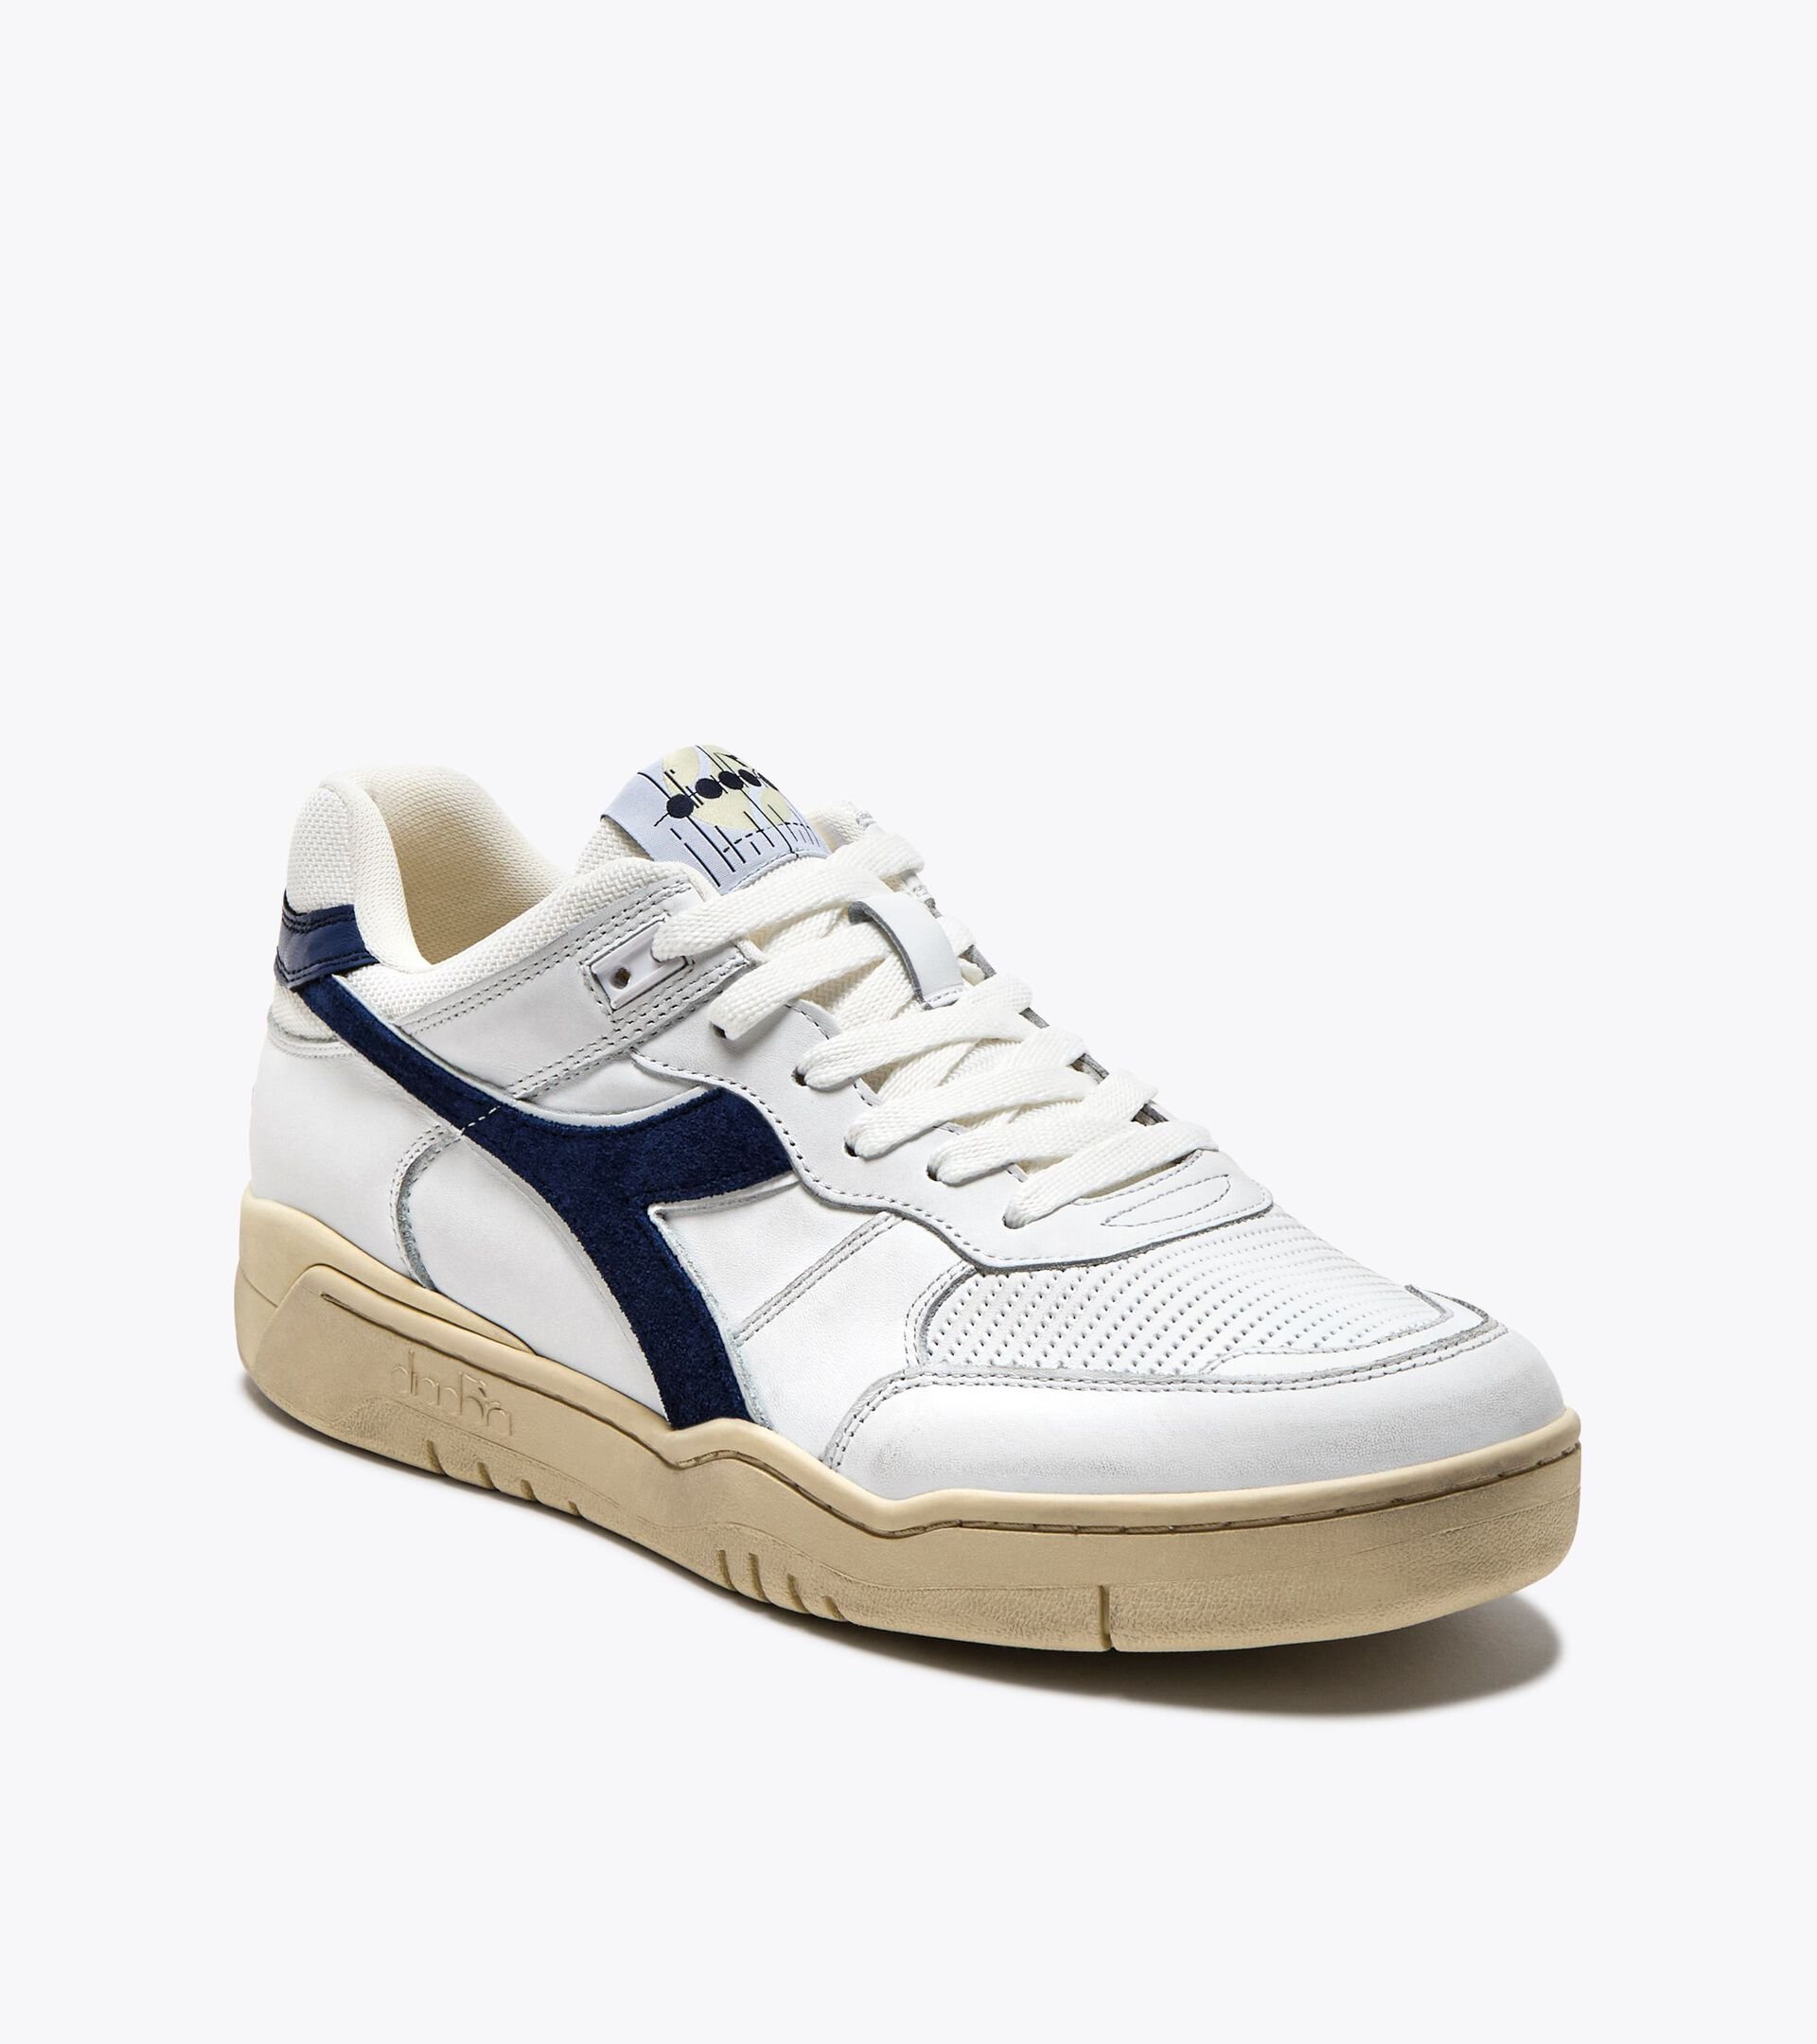 Heritage shoe - Gender Neutral B.560 USED WHITE/BLUE CORSAIR - Diadora